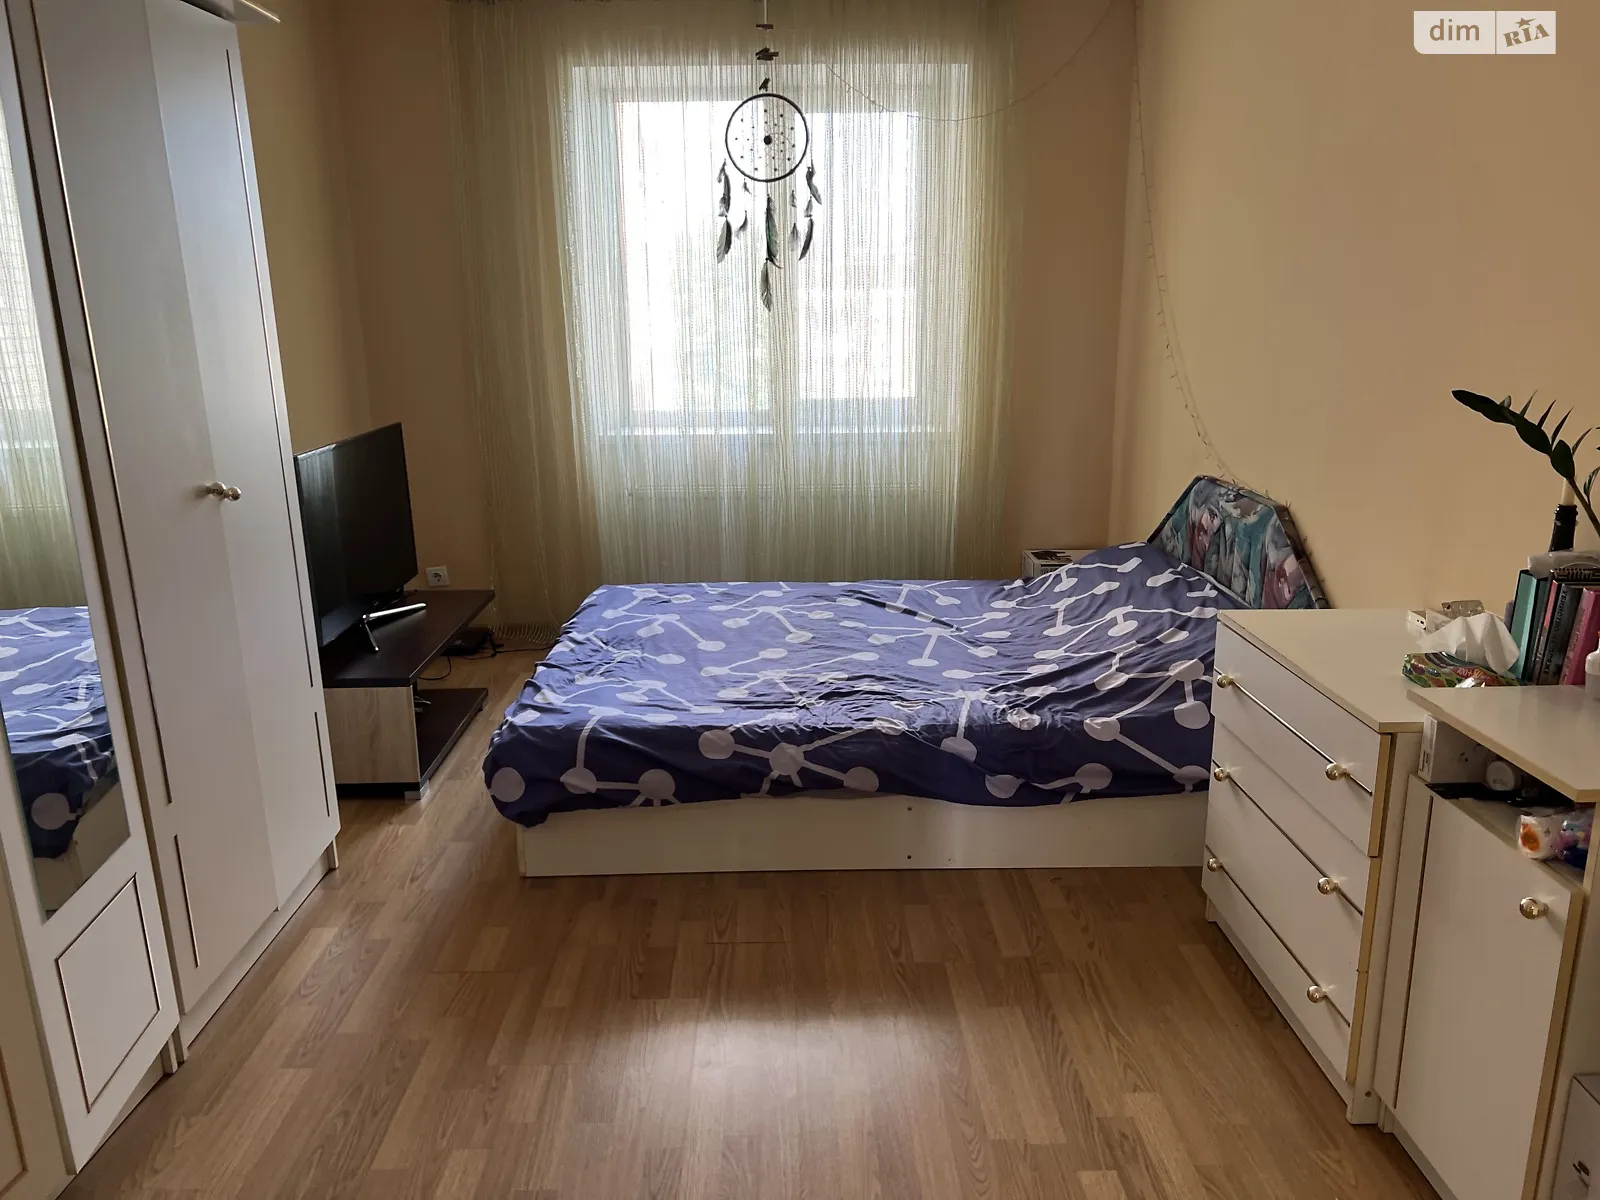 2-кімнатна квартира 60 кв. м у Тернополі, цена: 51000 $ - фото 1